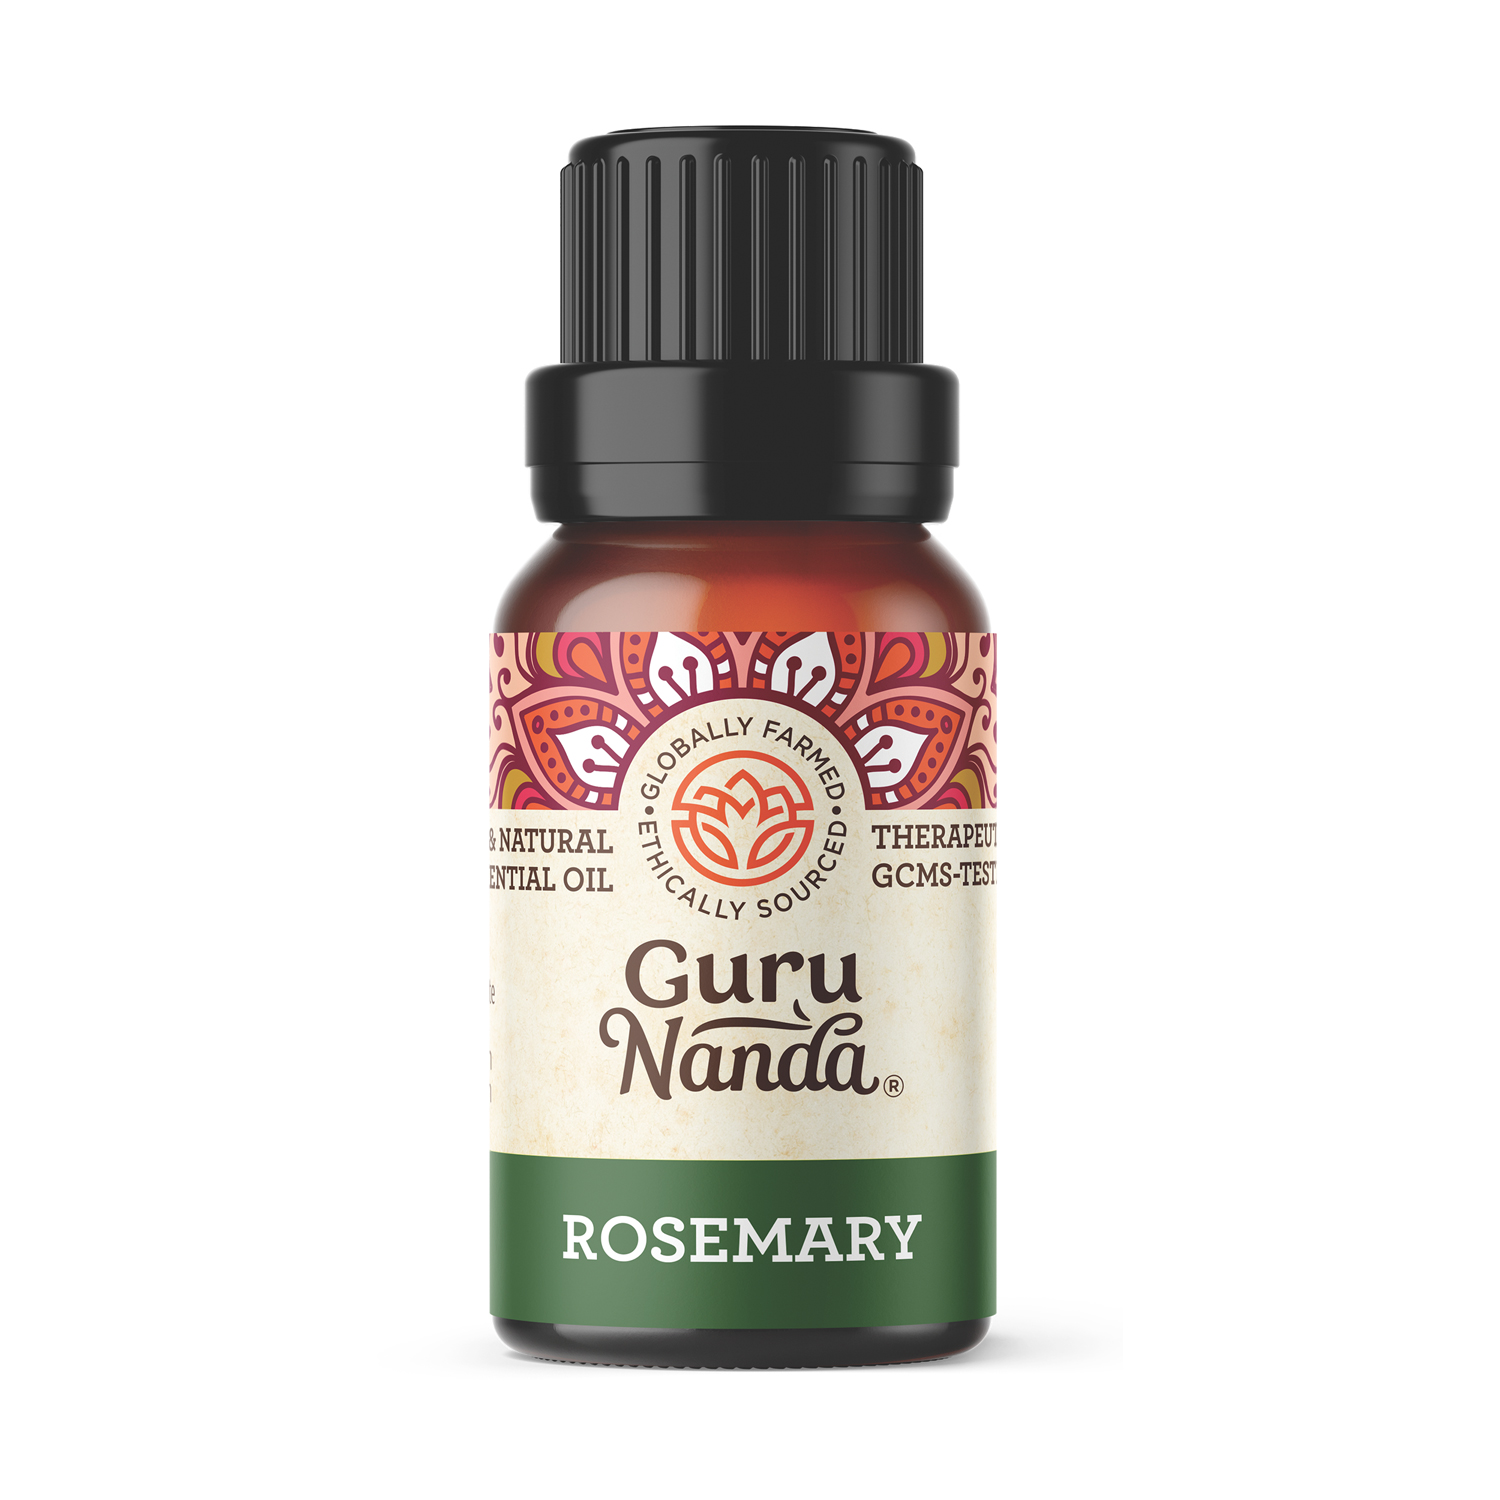 Guru Nanda Rosemary Essential Oil 100% Pure and Natural 0.5 fl. oz. - image 1 of 5